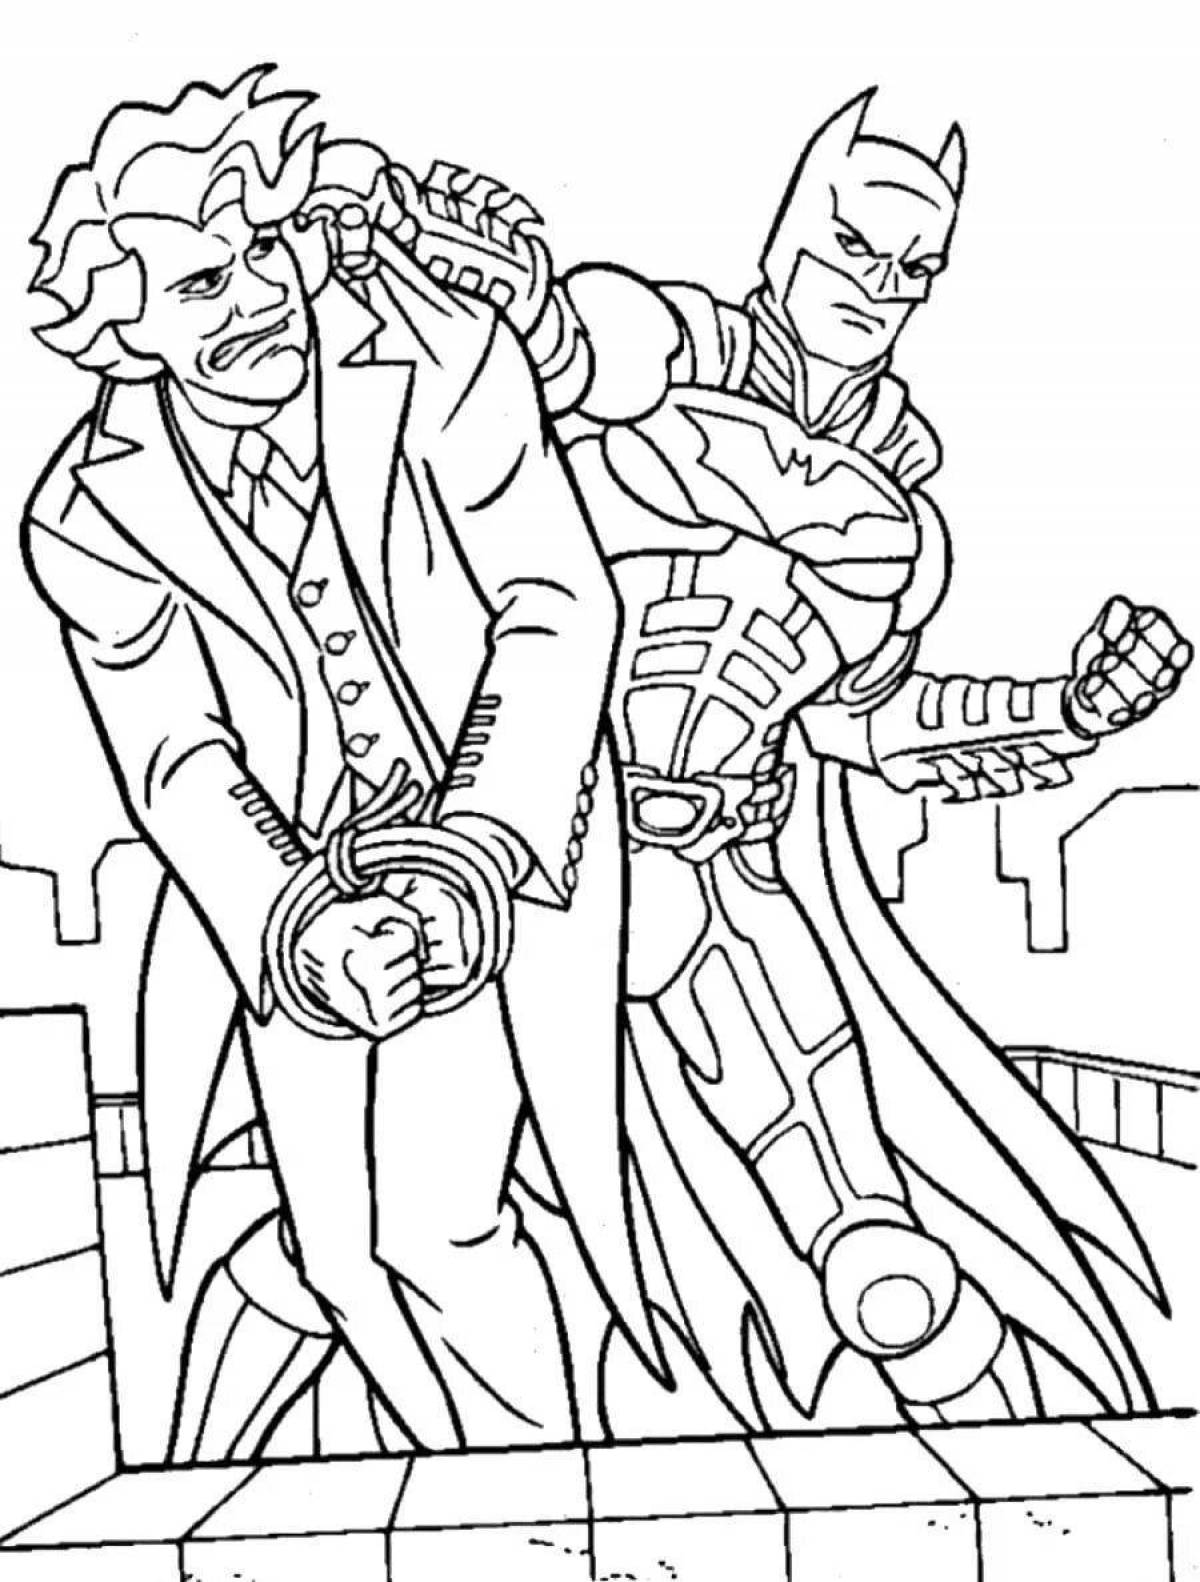 Batman and Joker intense coloring